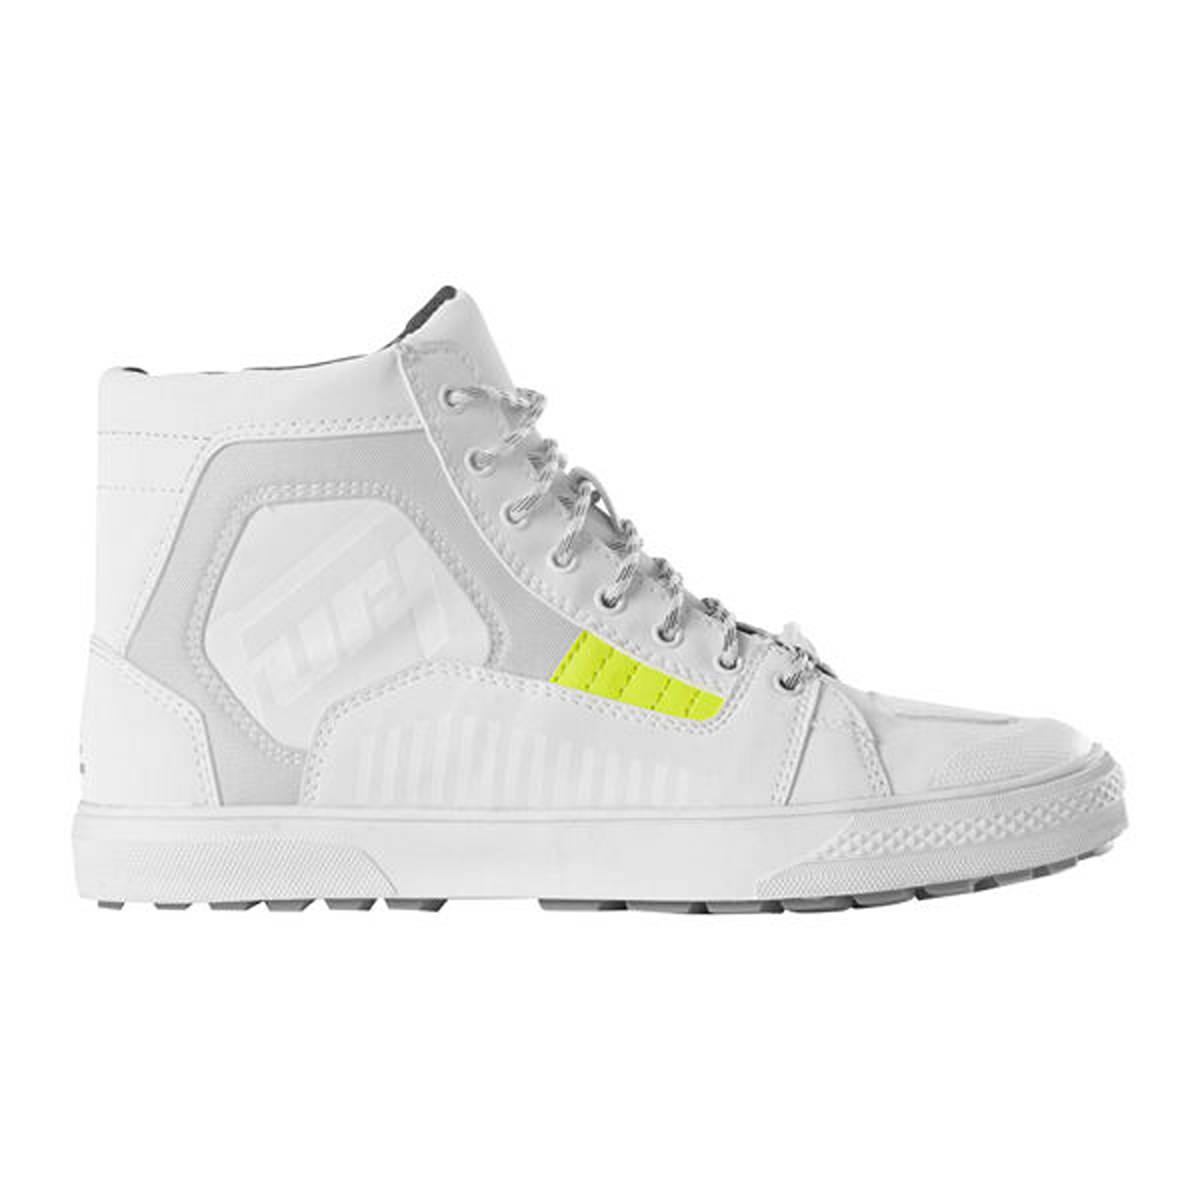 Image of Furygan Sacramento D30 Shoes White Grey Size 39 ID 3435980368111